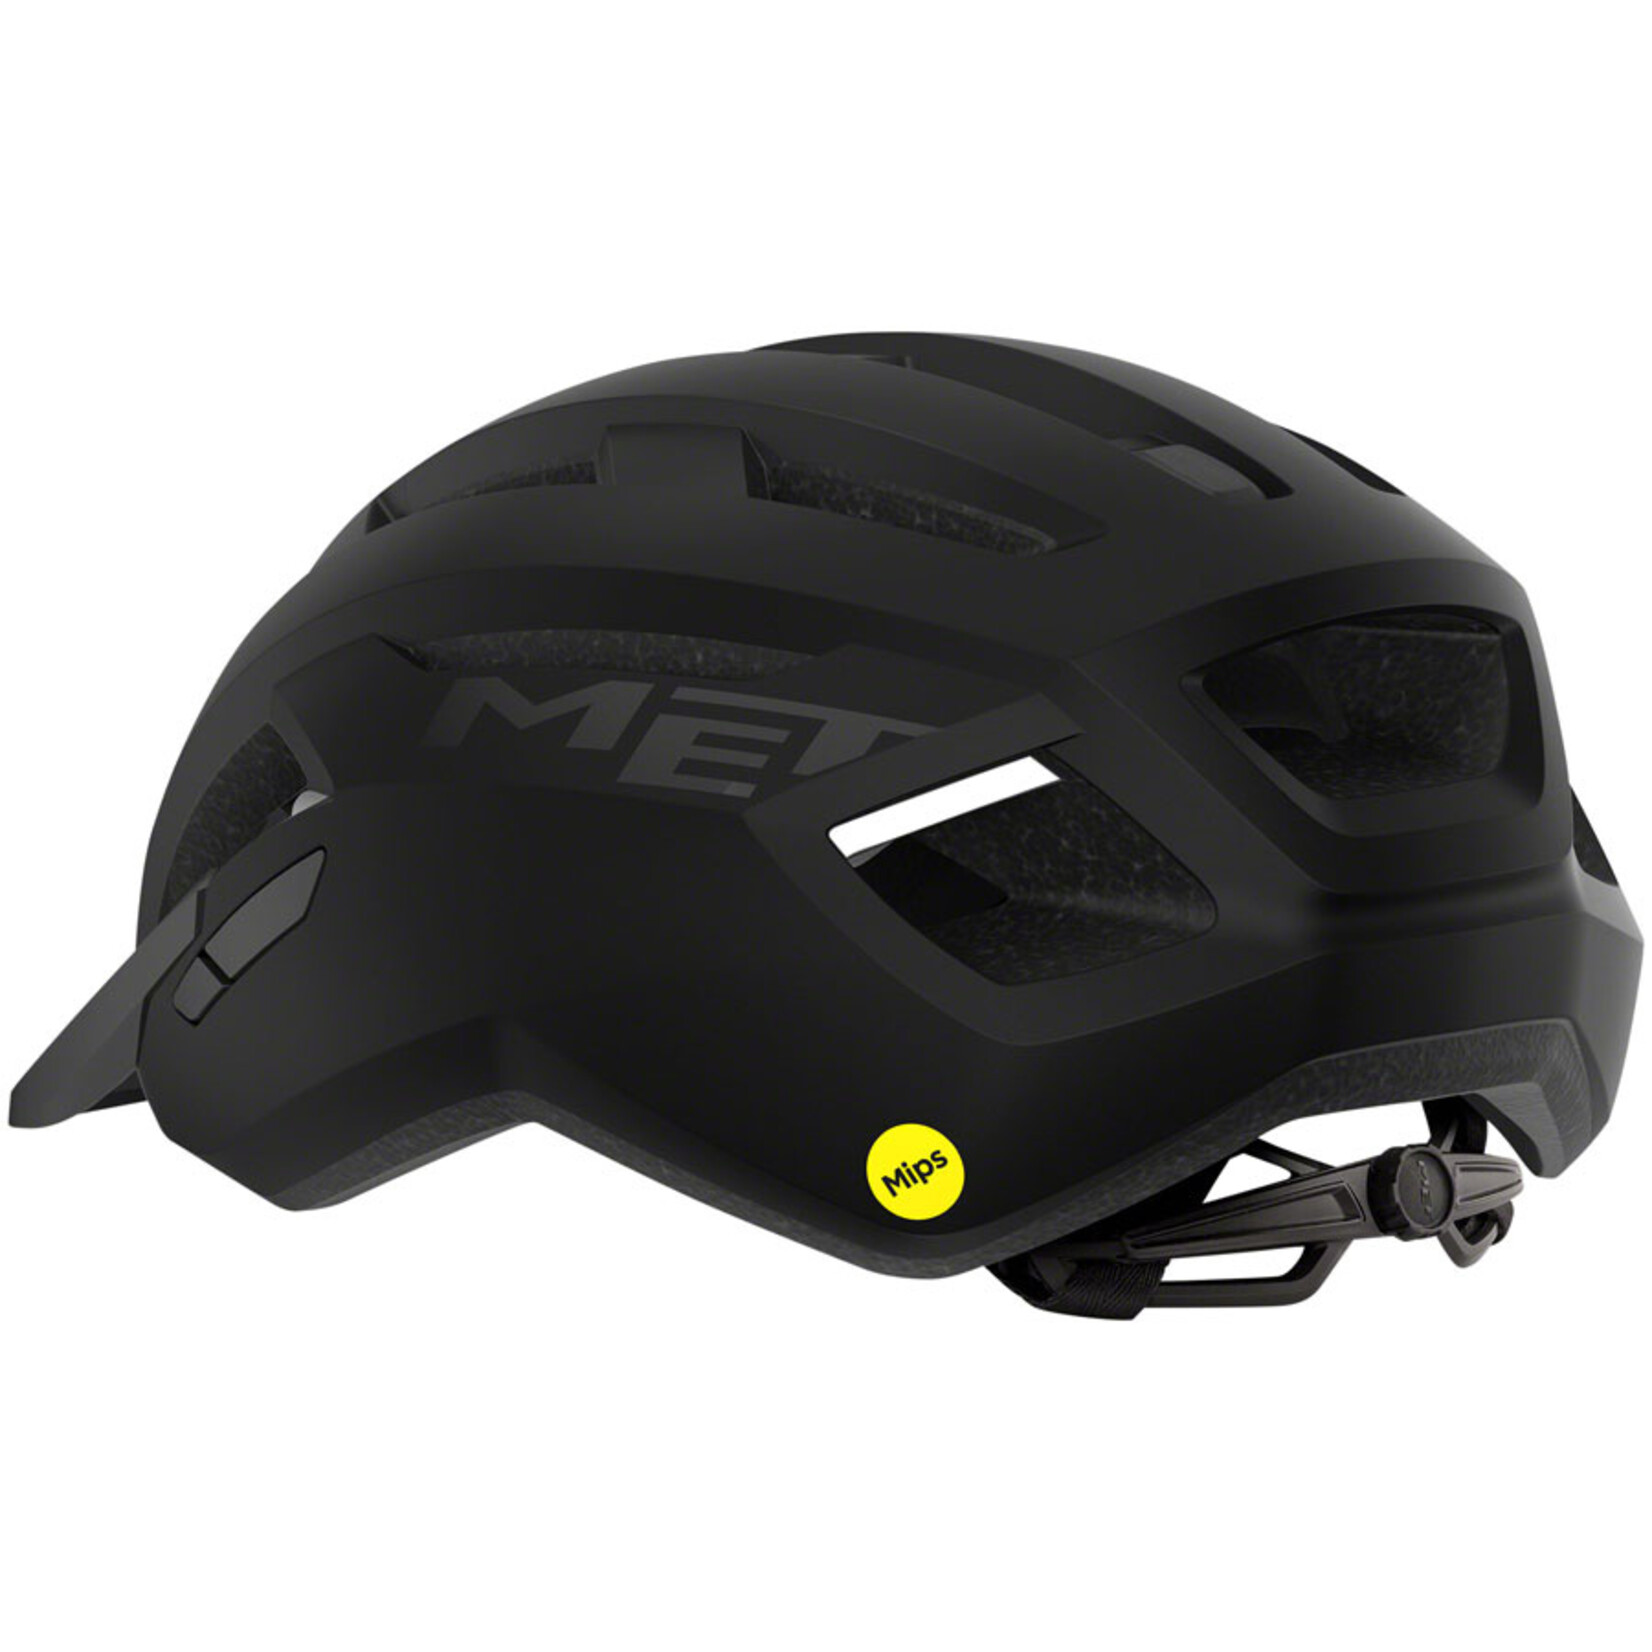 MET Helmets MET Allroad MIPS Helmet - Black, Matte, Medium